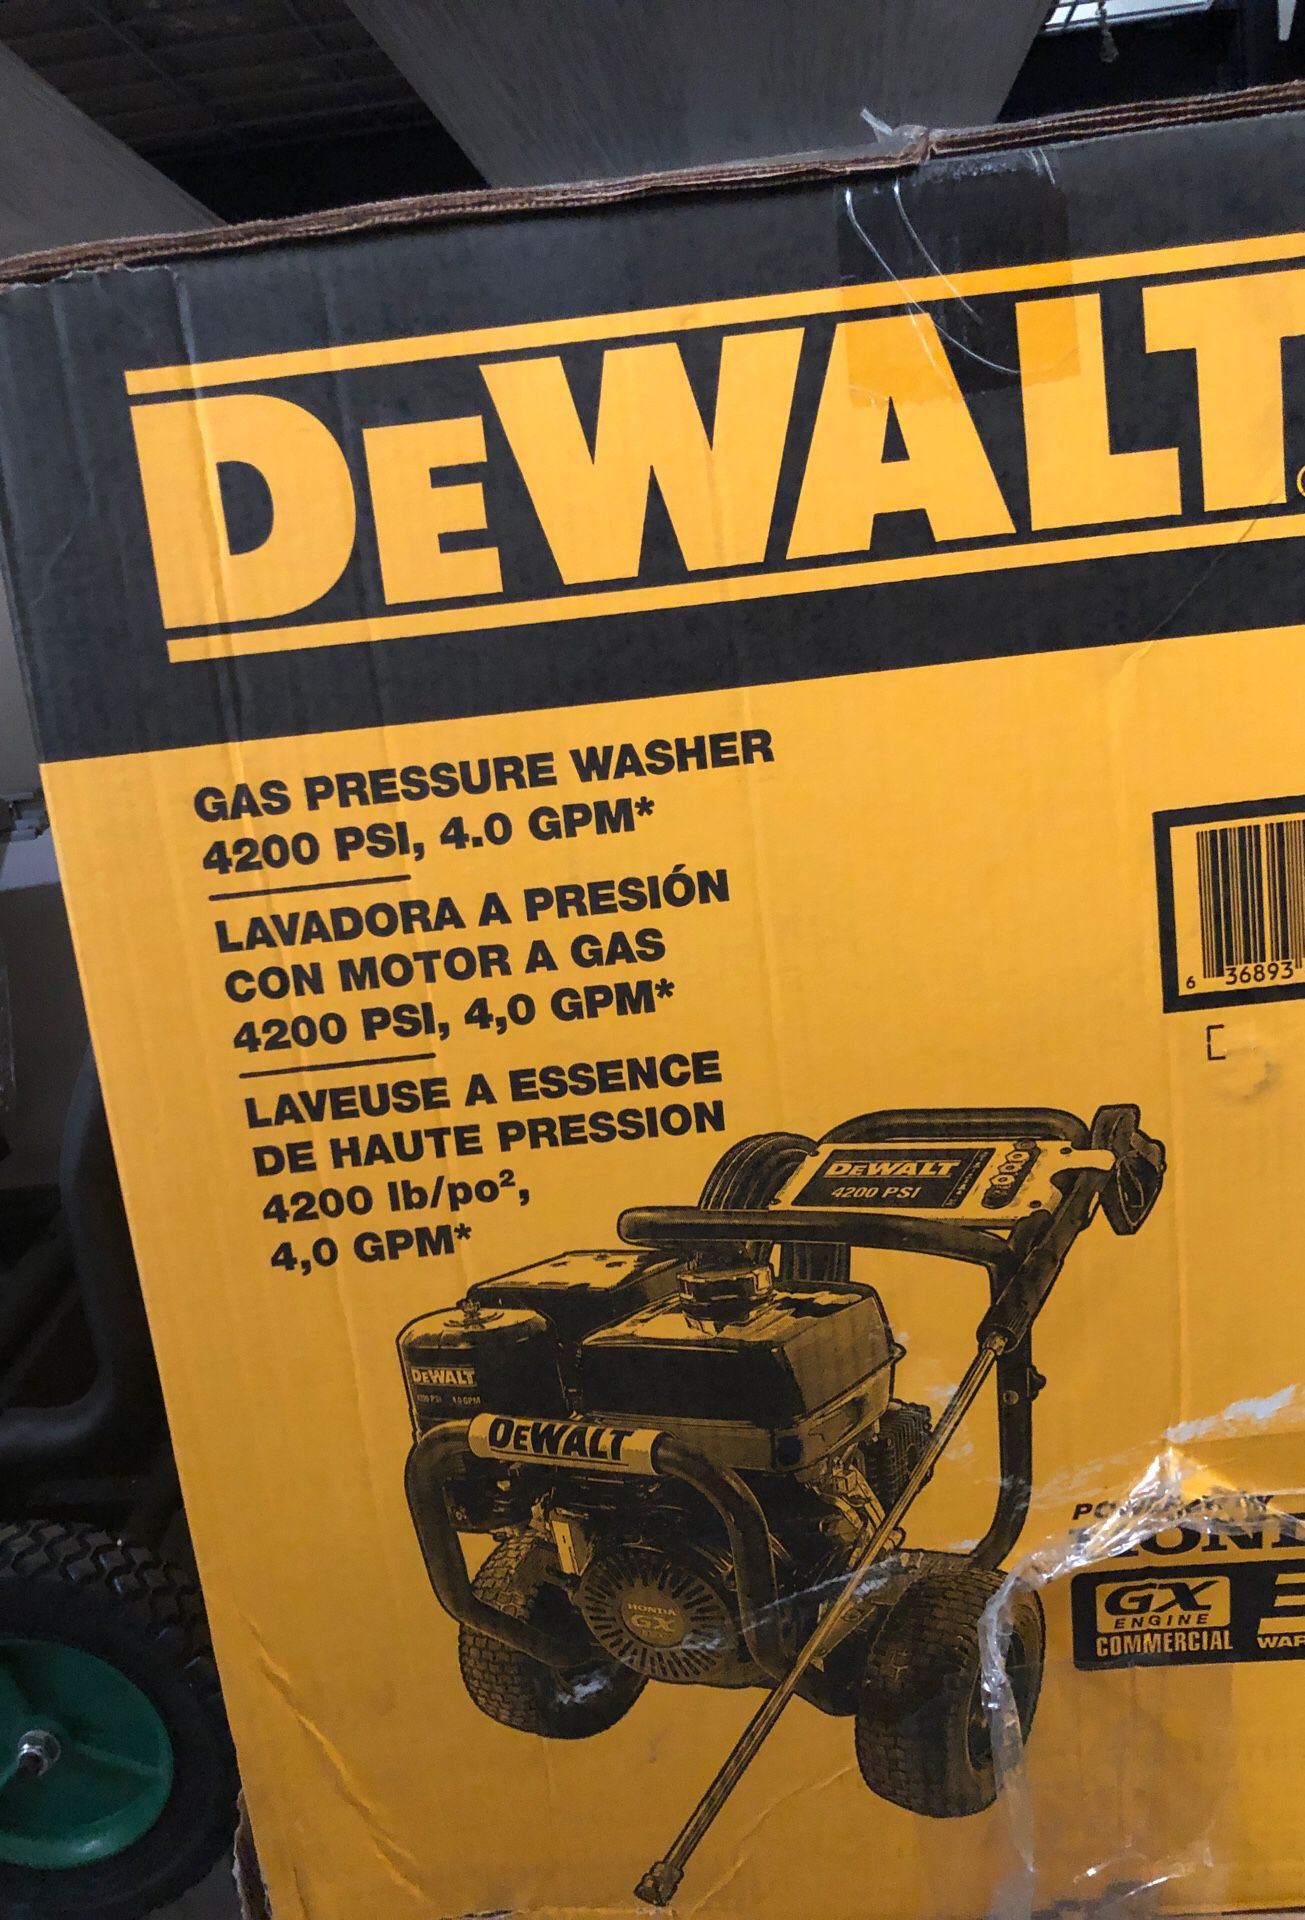 Desalt 4200 psi pressure washer